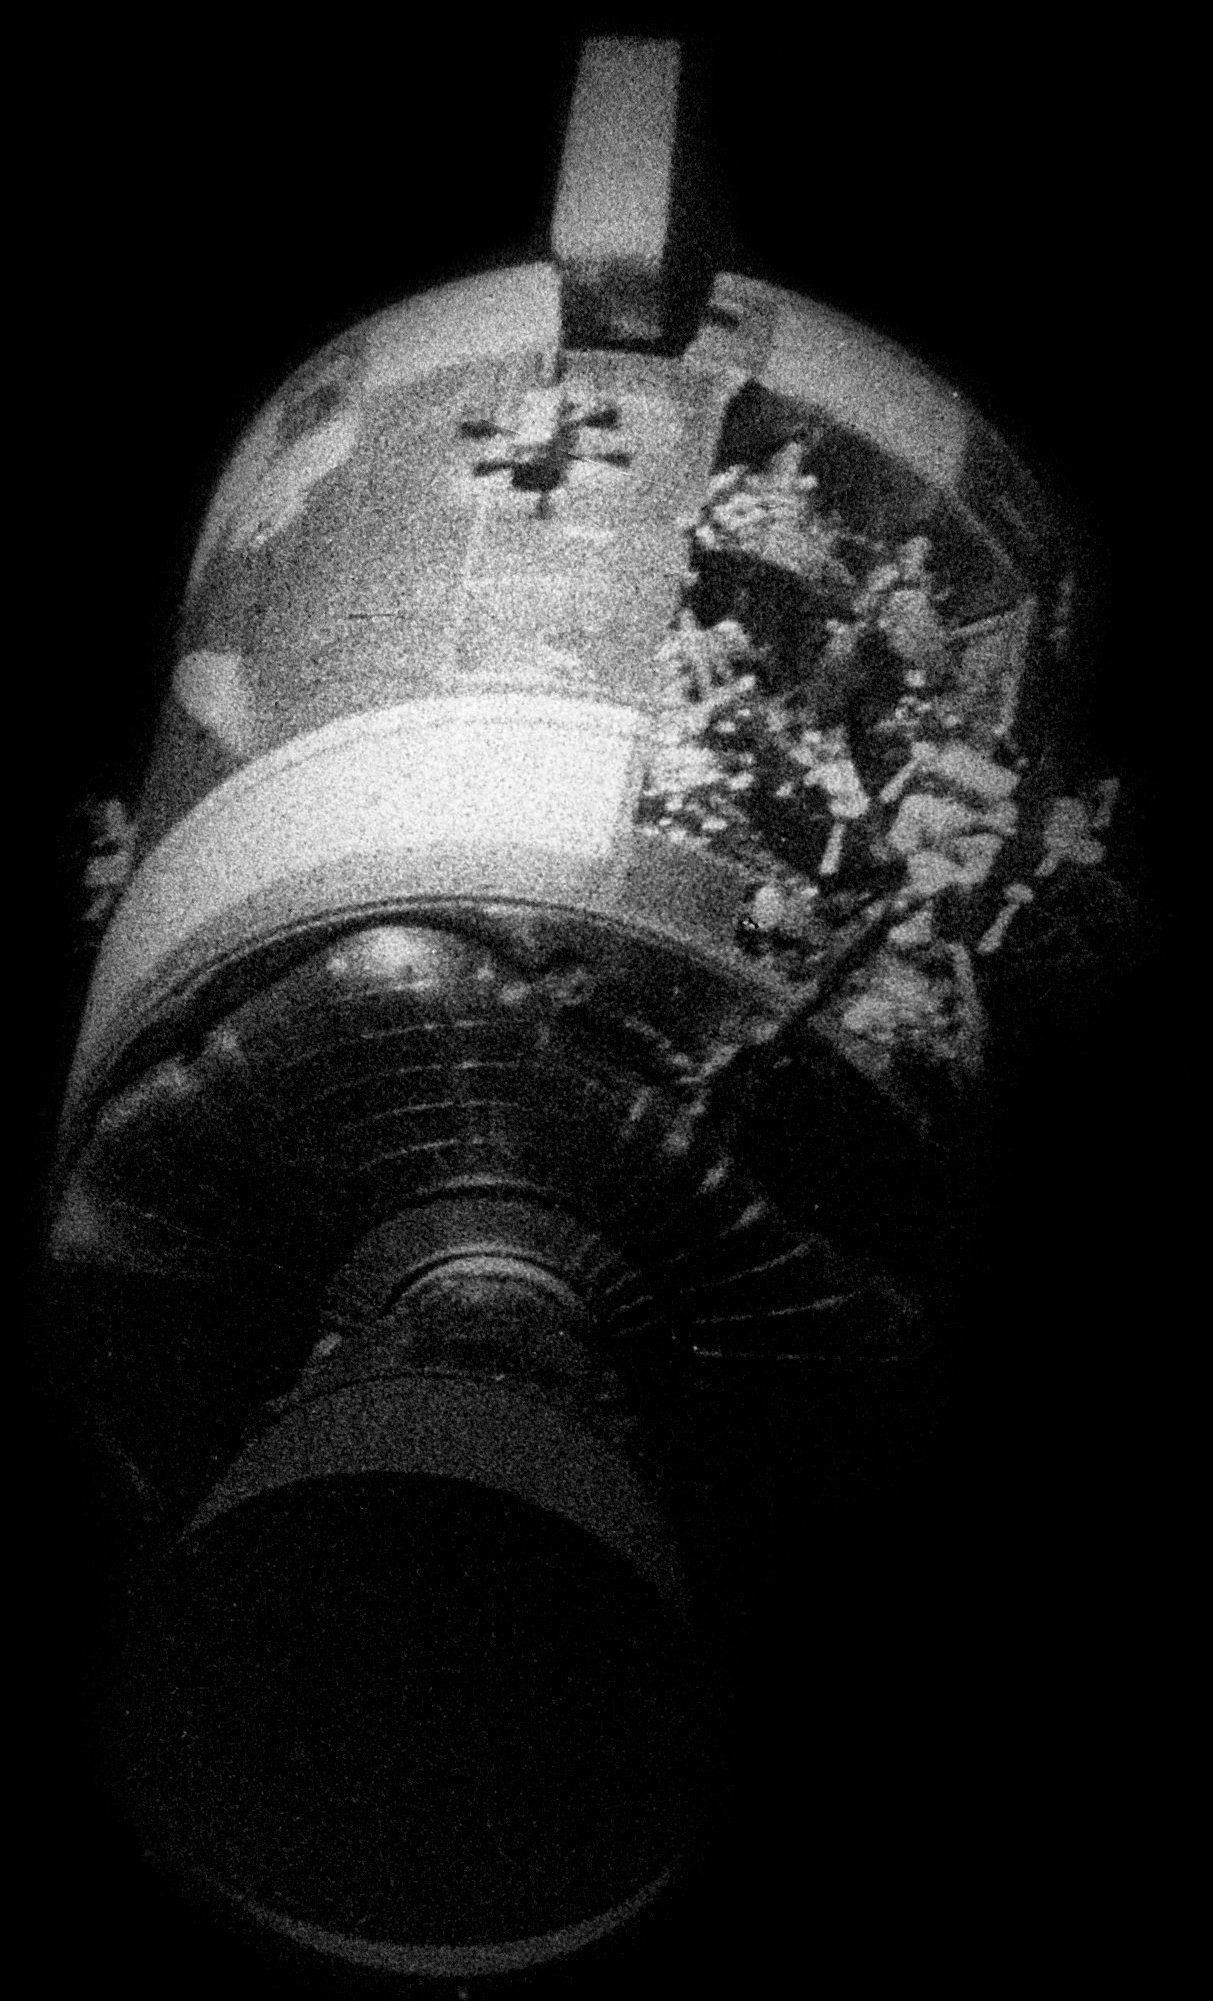 Apollo 13 Service Module damage Blank Meme Template